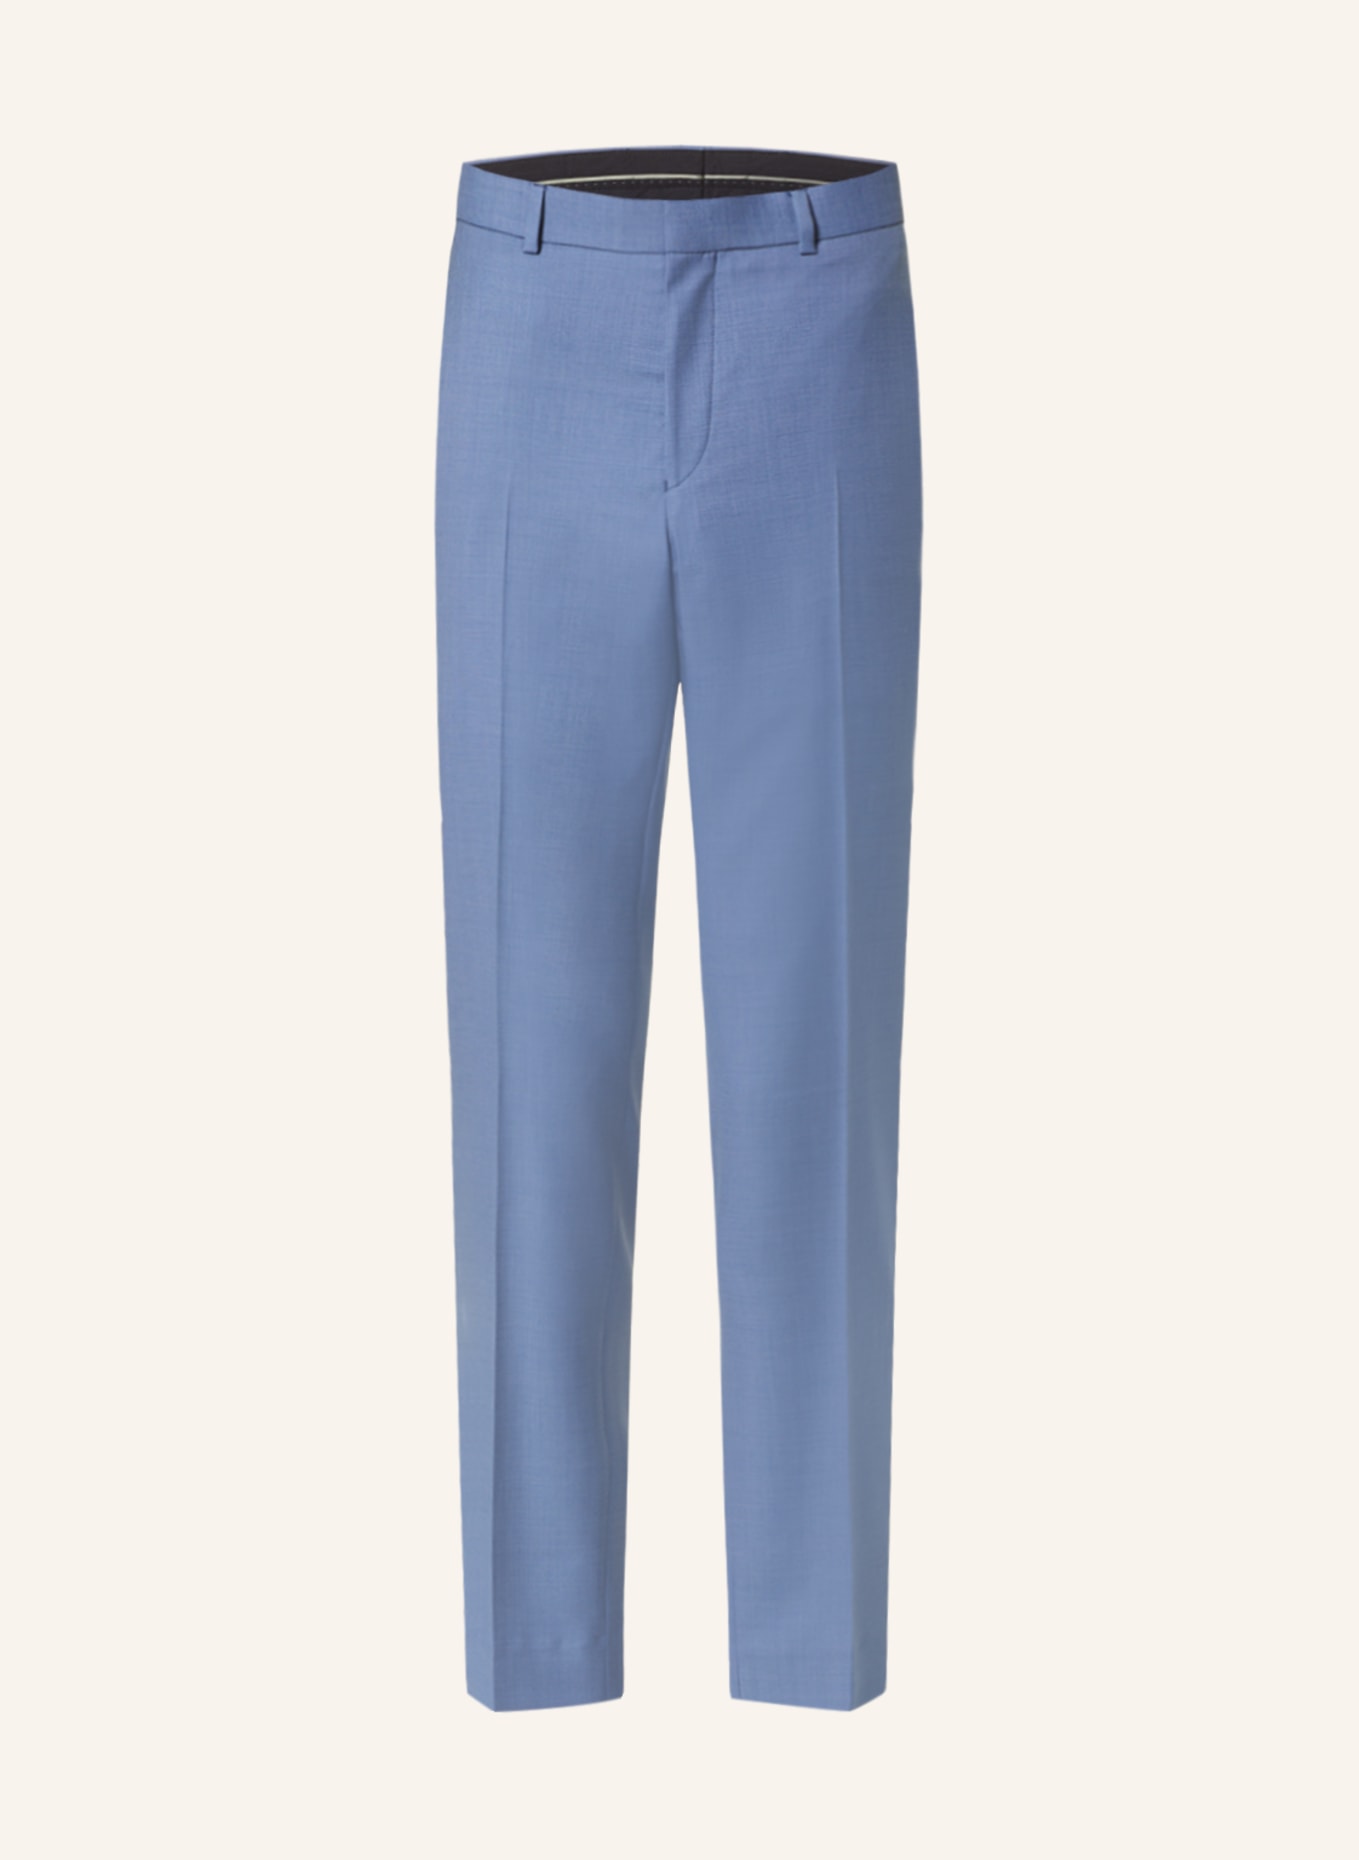 TED BAKER Anzughose DORSETS Slim Fit, Farbe: BLUE BLUE (Bild 1)